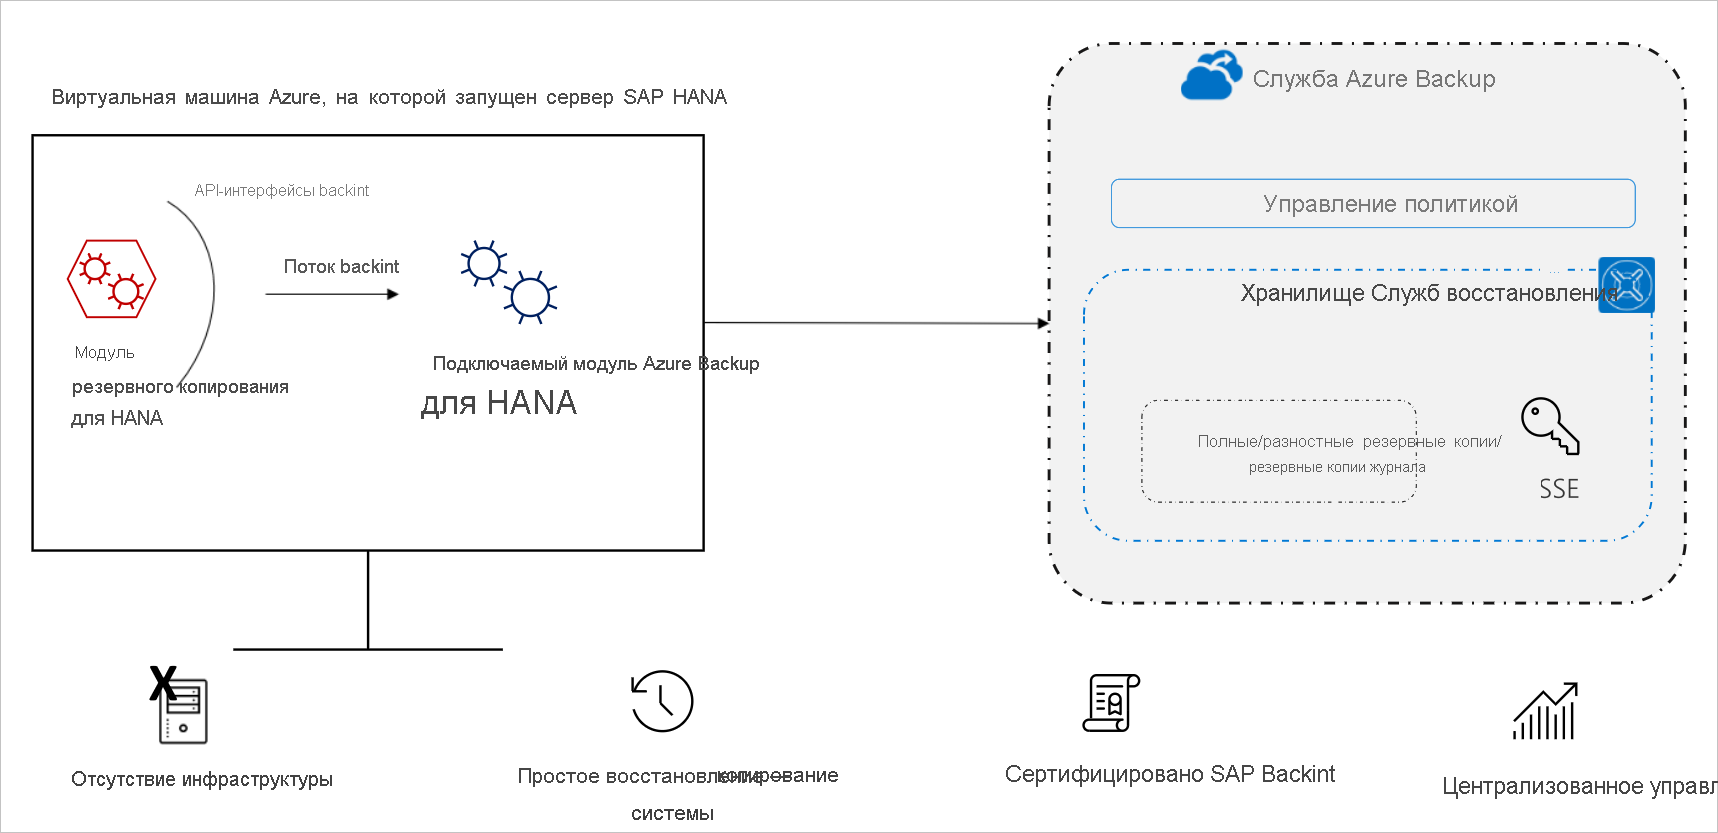 Diagram of the SAP HANA Backup architecture.